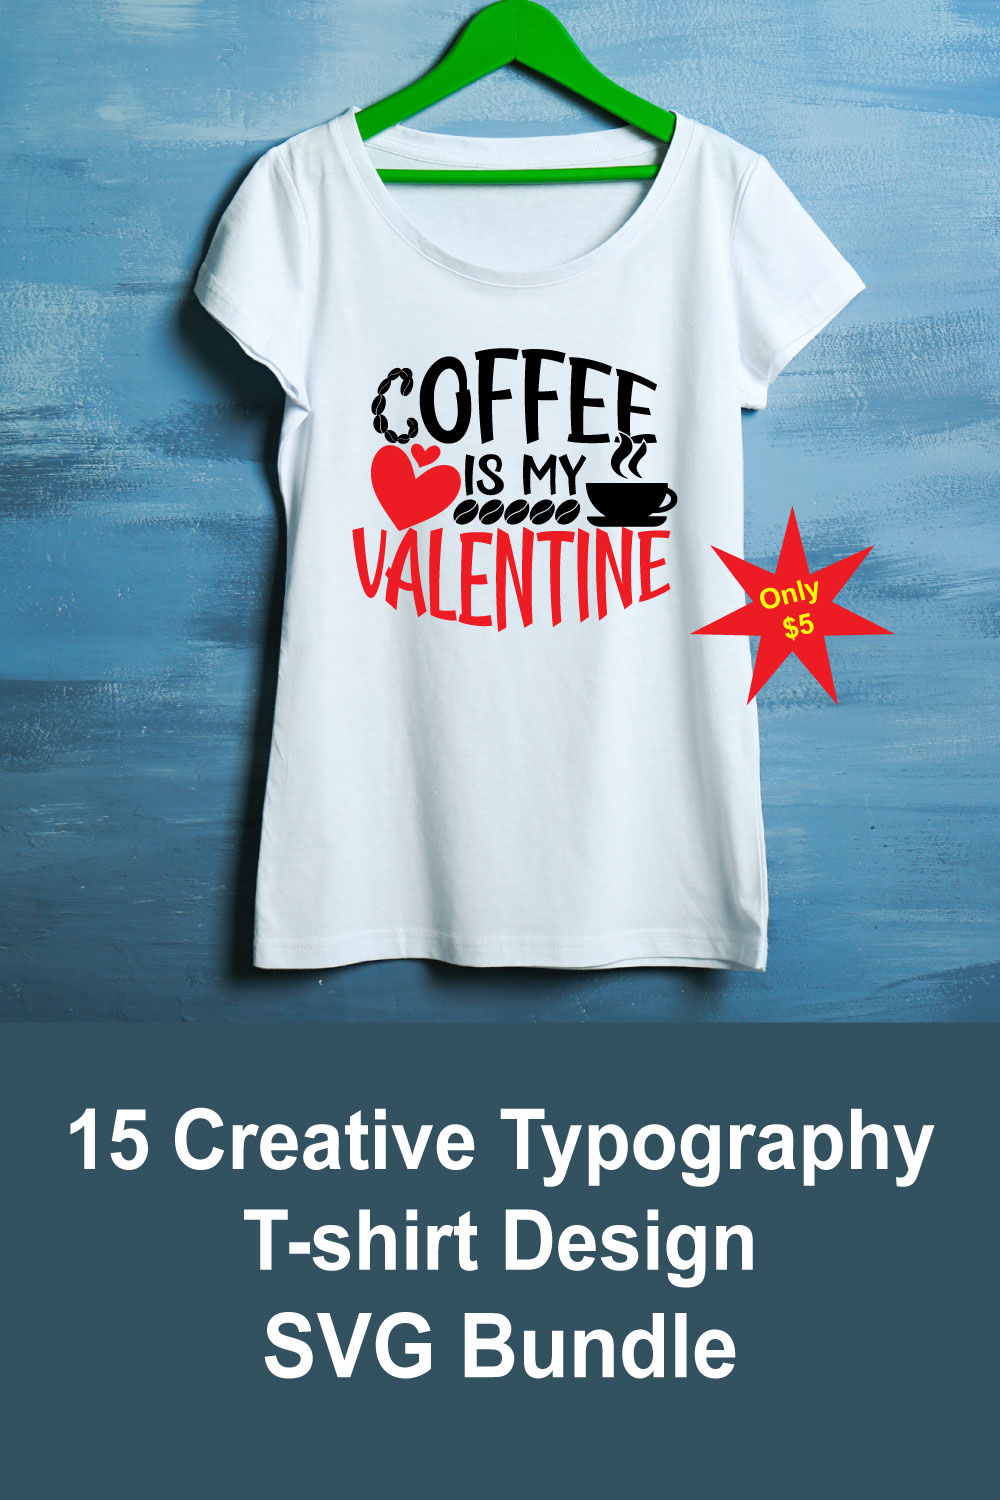 T-shirt Typography Design Quotes SVG pinterest image.